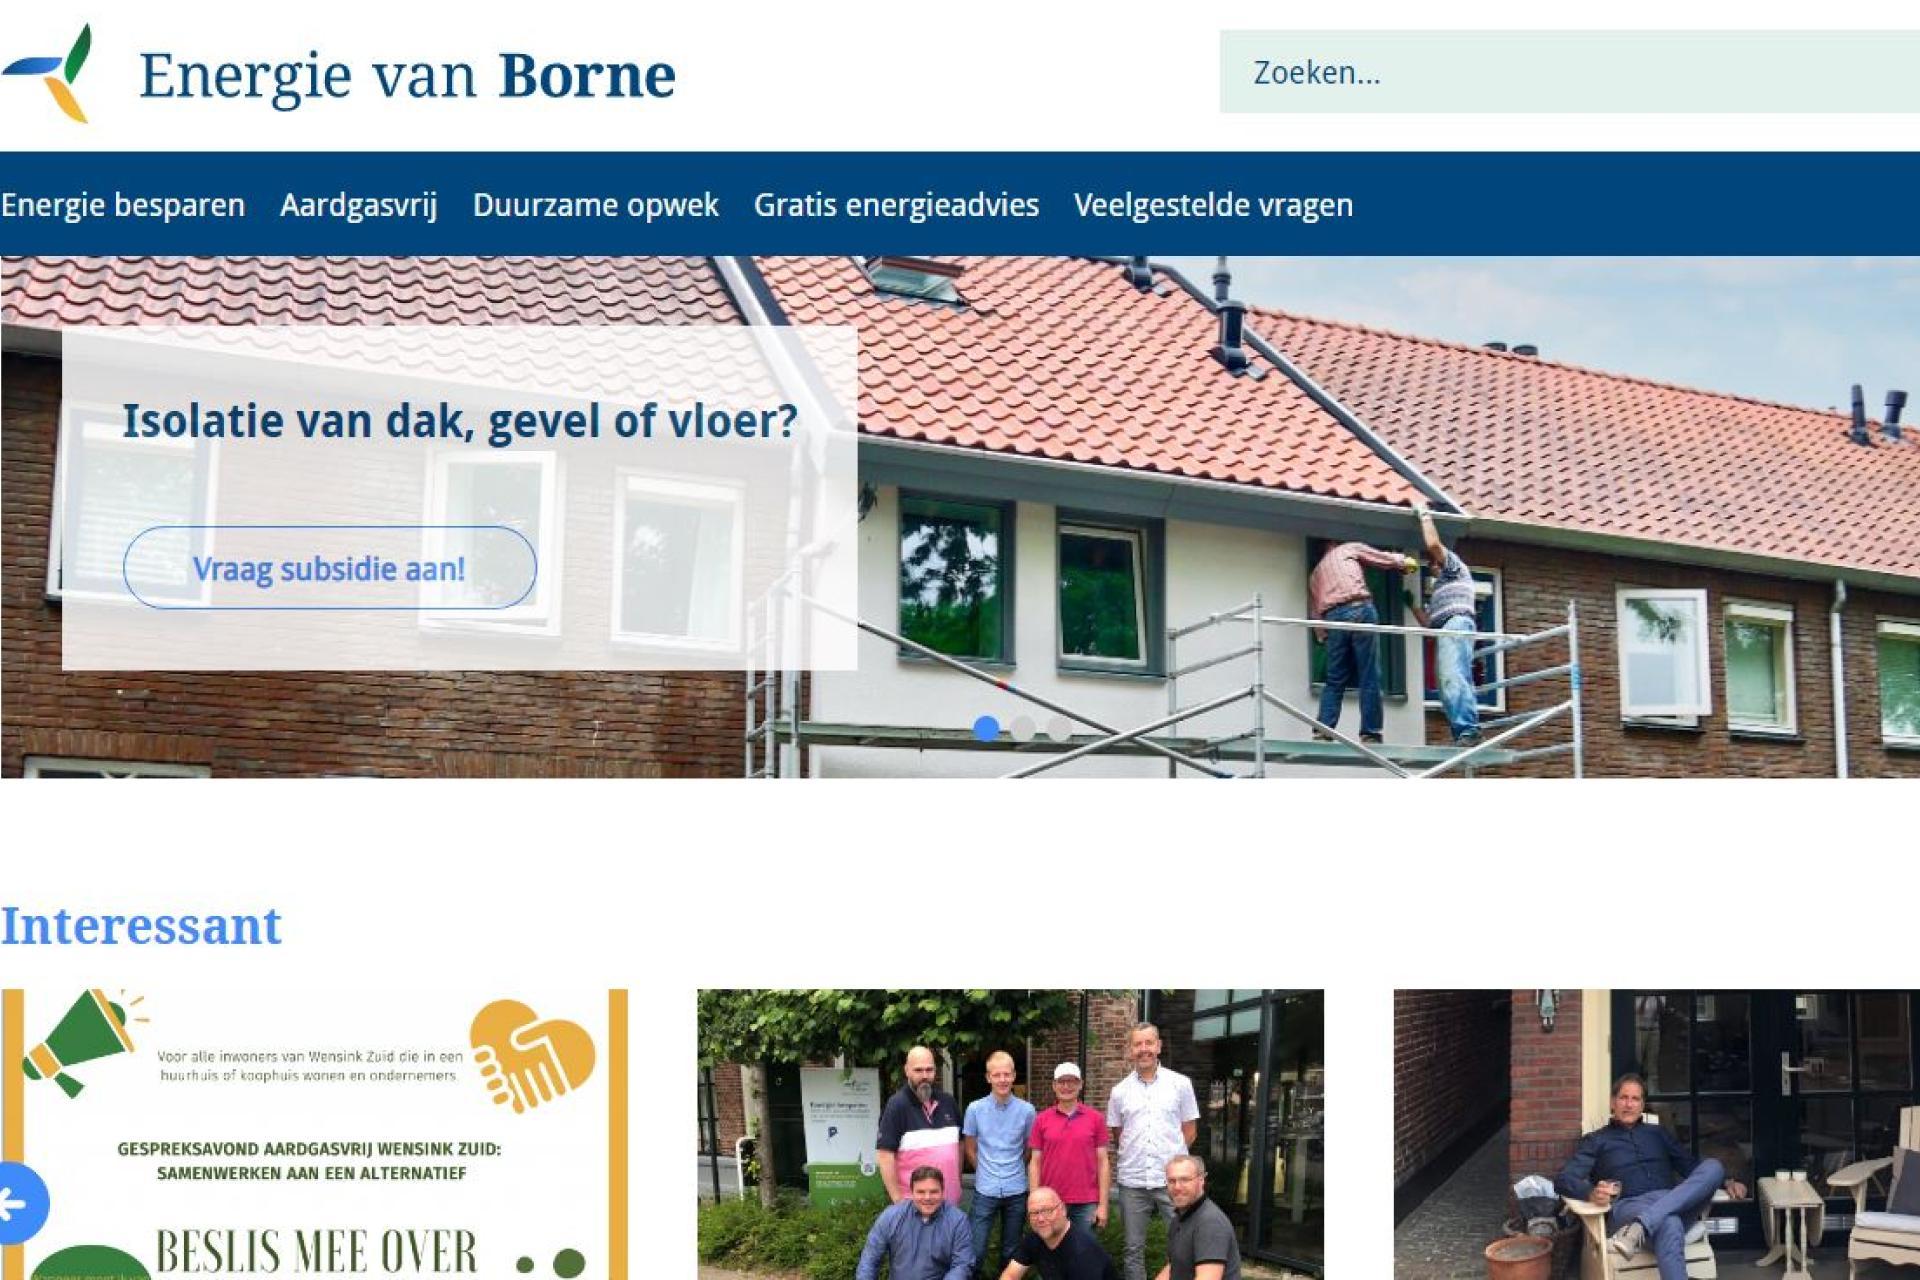 website energievanborne.nl